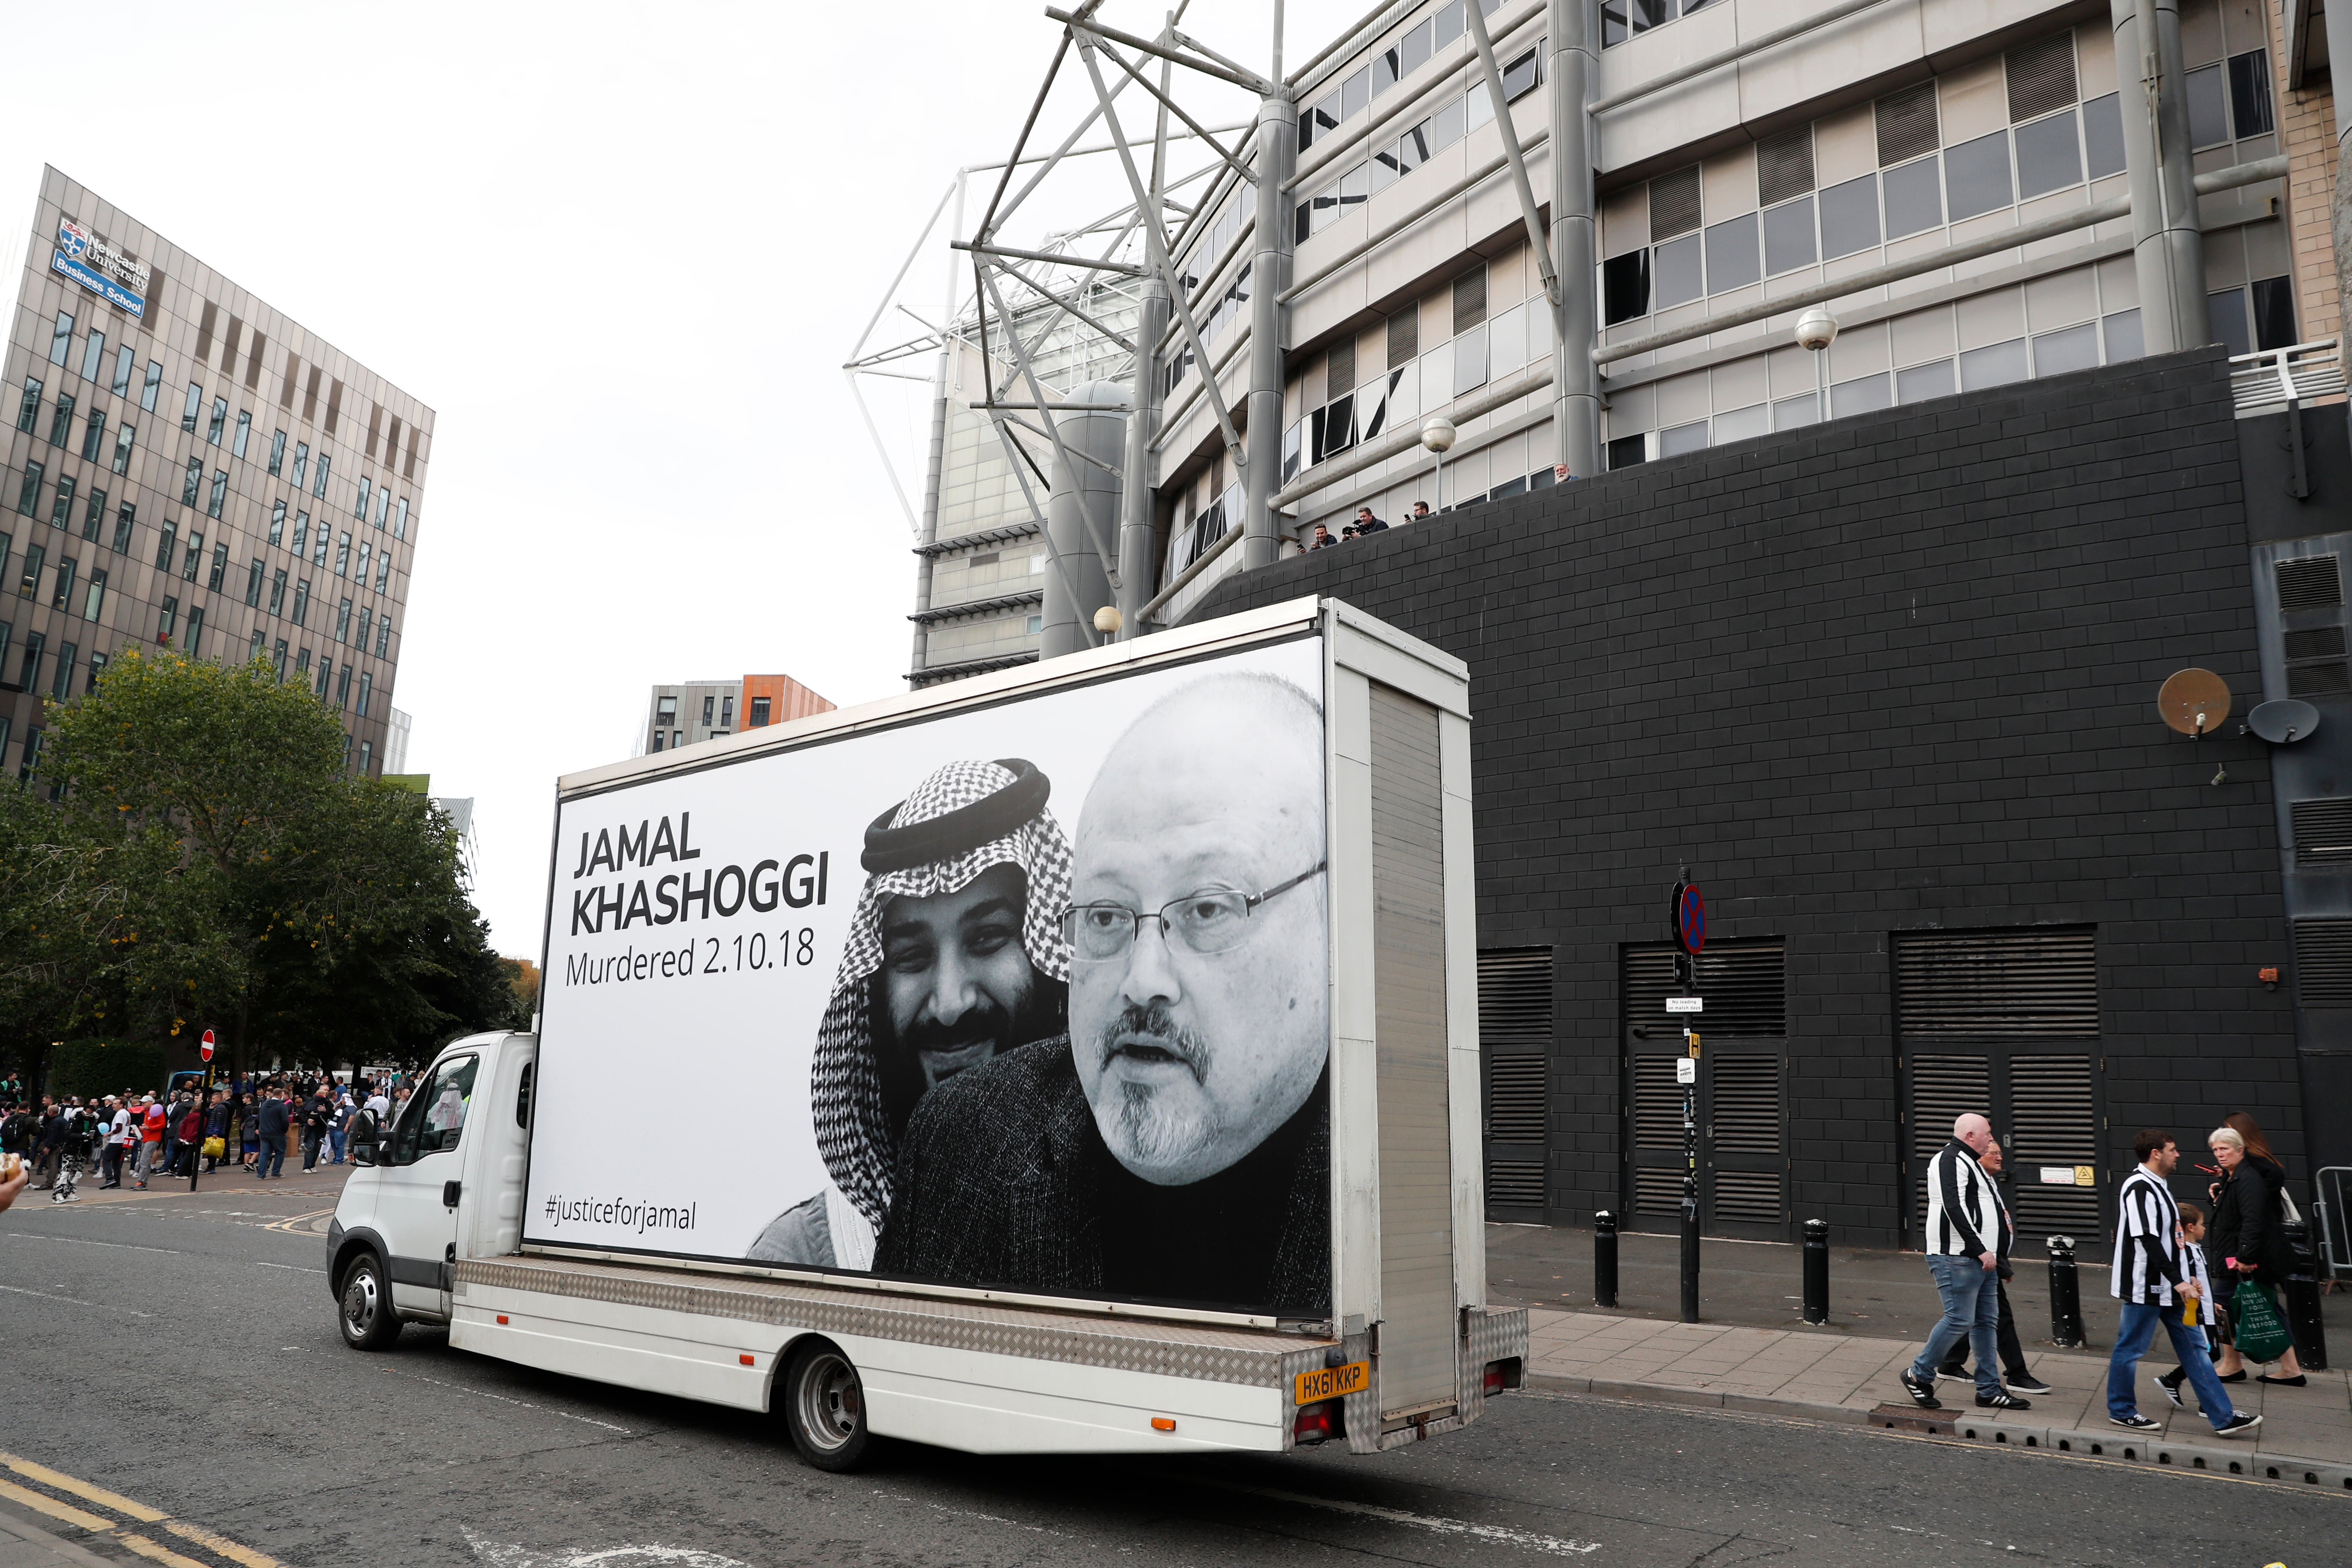 A van drives around the stadium bearing Jamal Khashoggi’s face